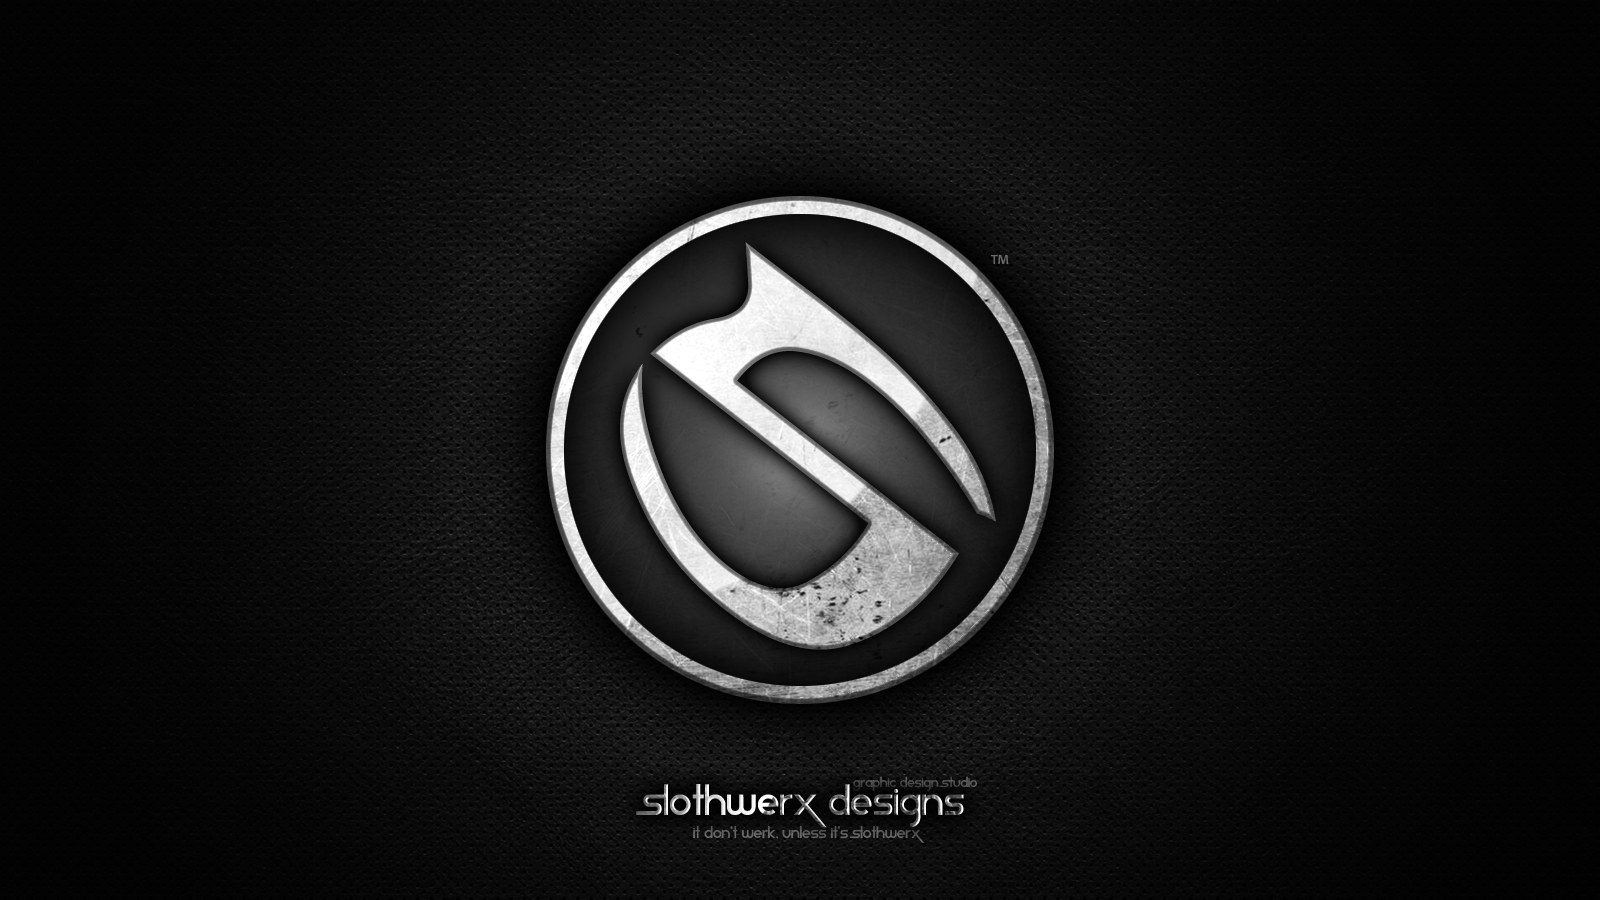 Slothwerx Design S Logo Wallpaper By SlotHDesigns